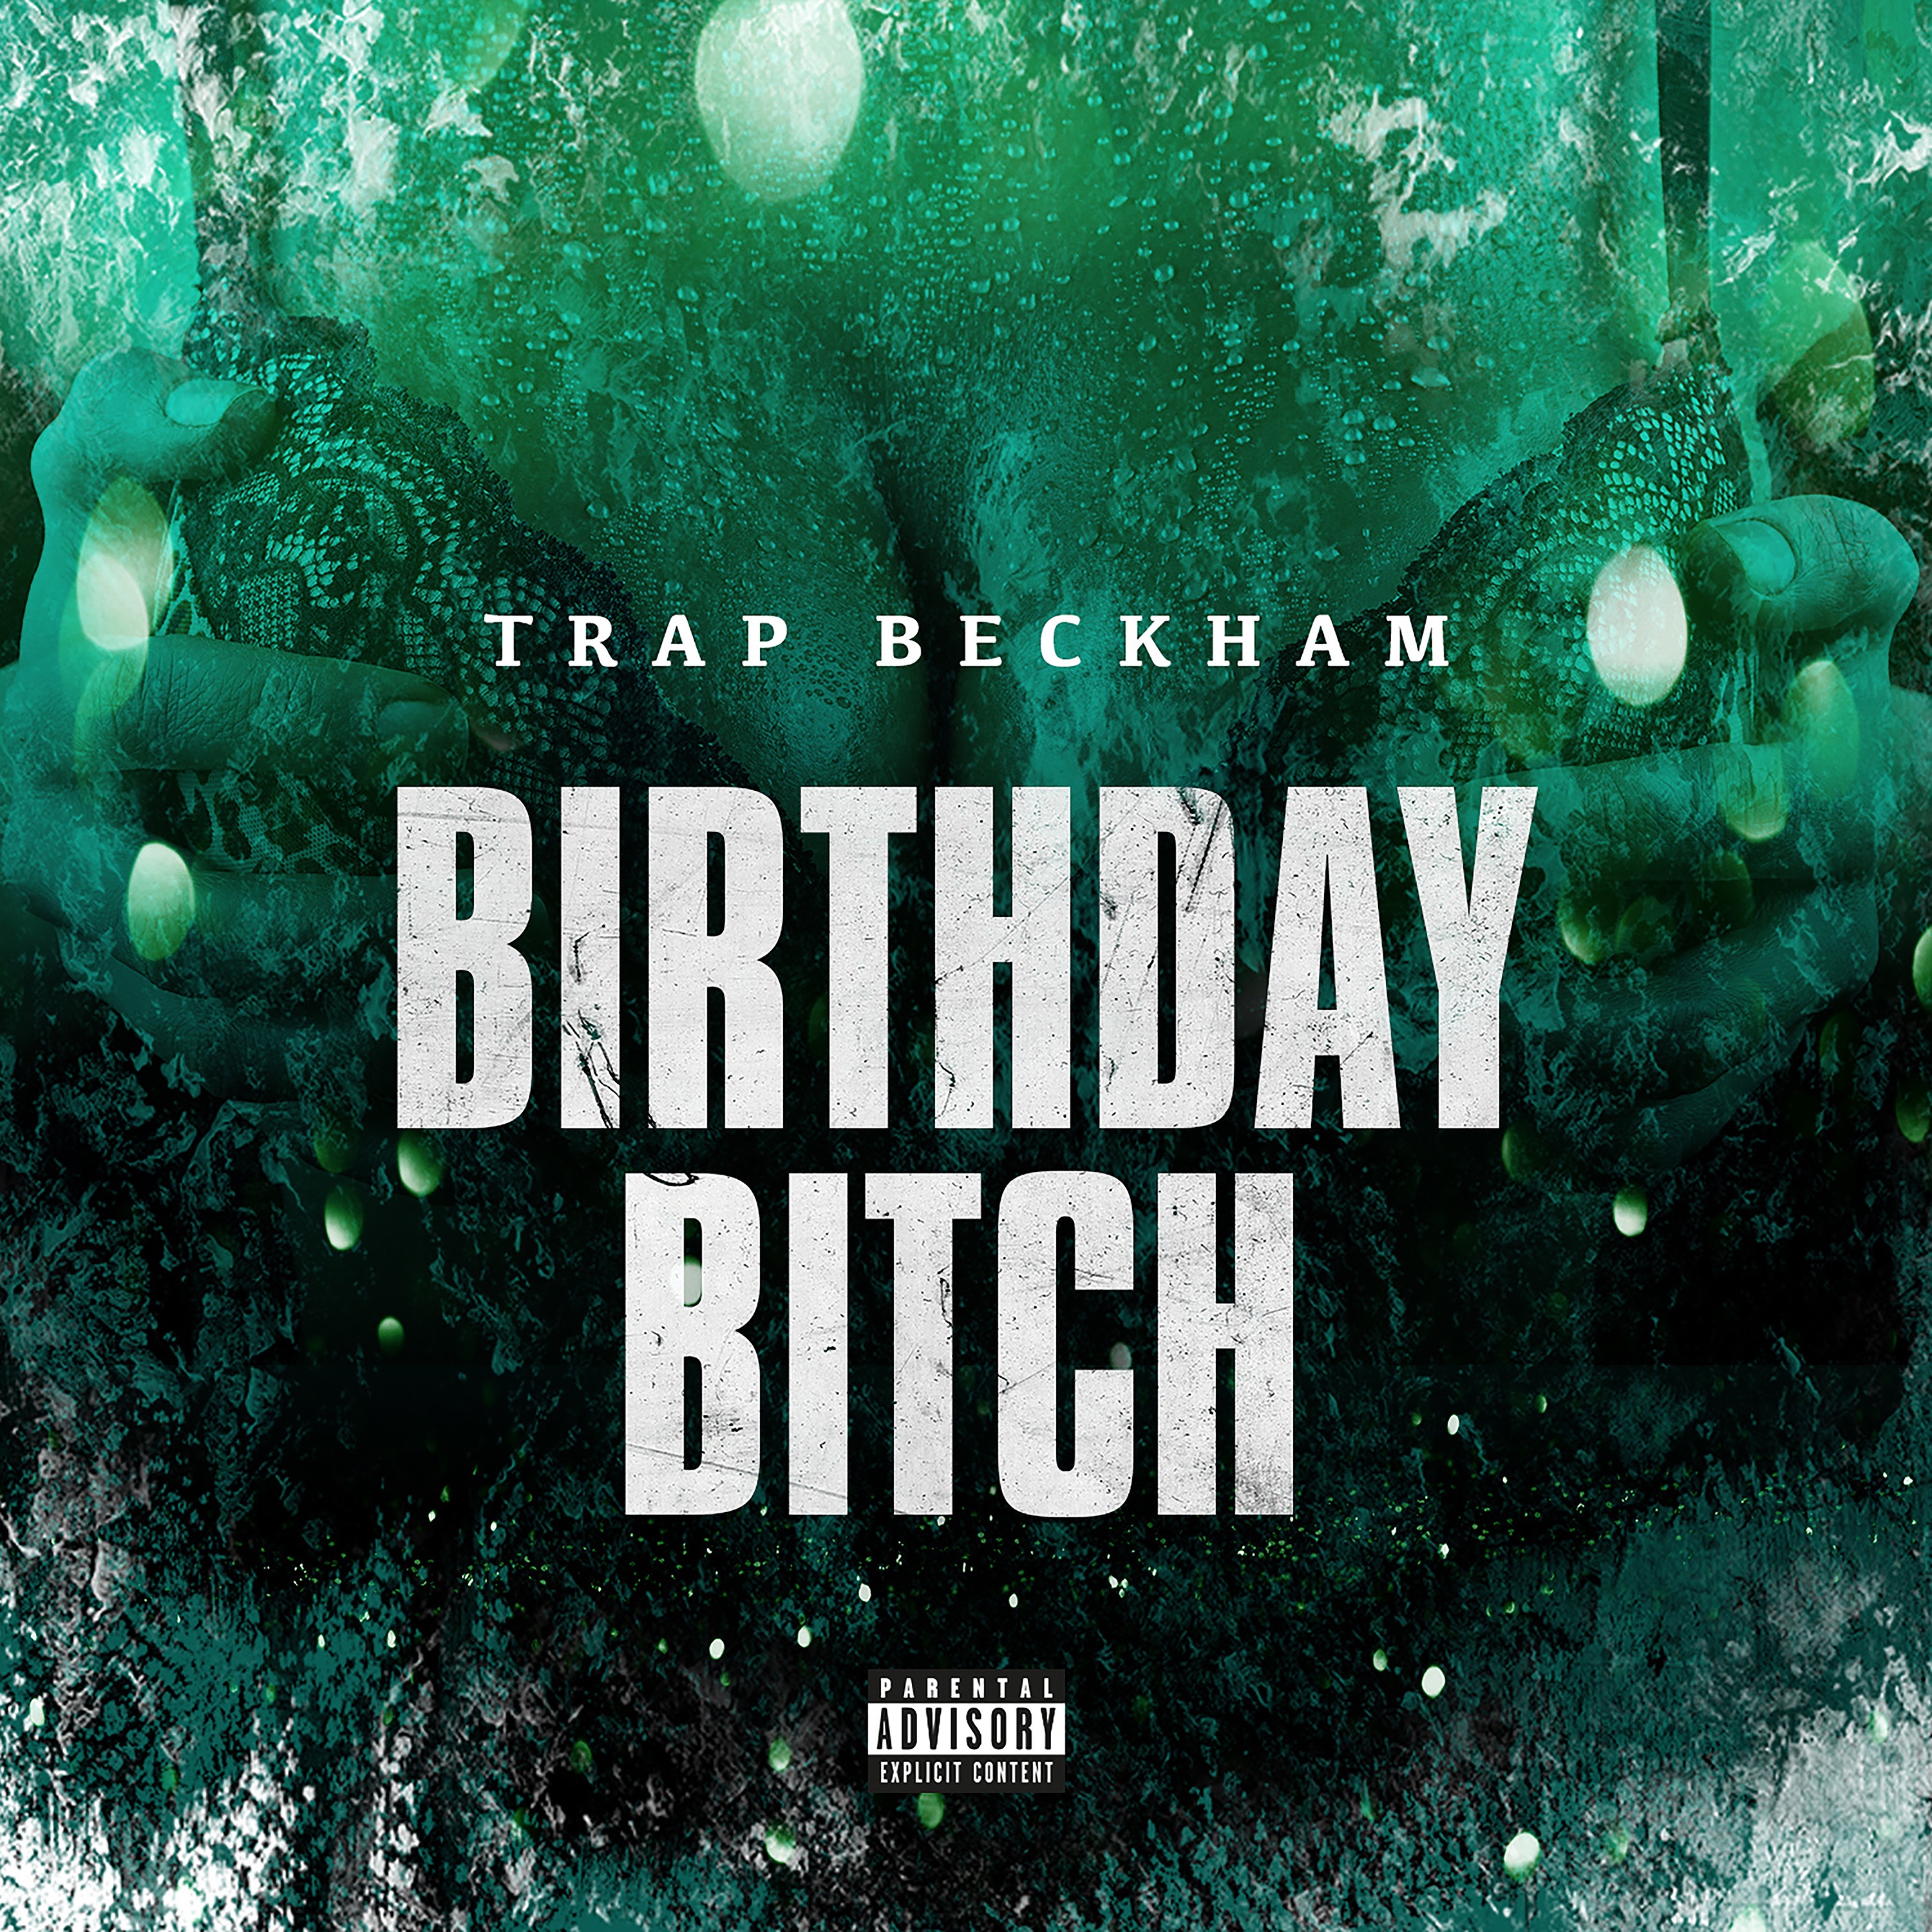 Birthday Bitch by Trap Beckham